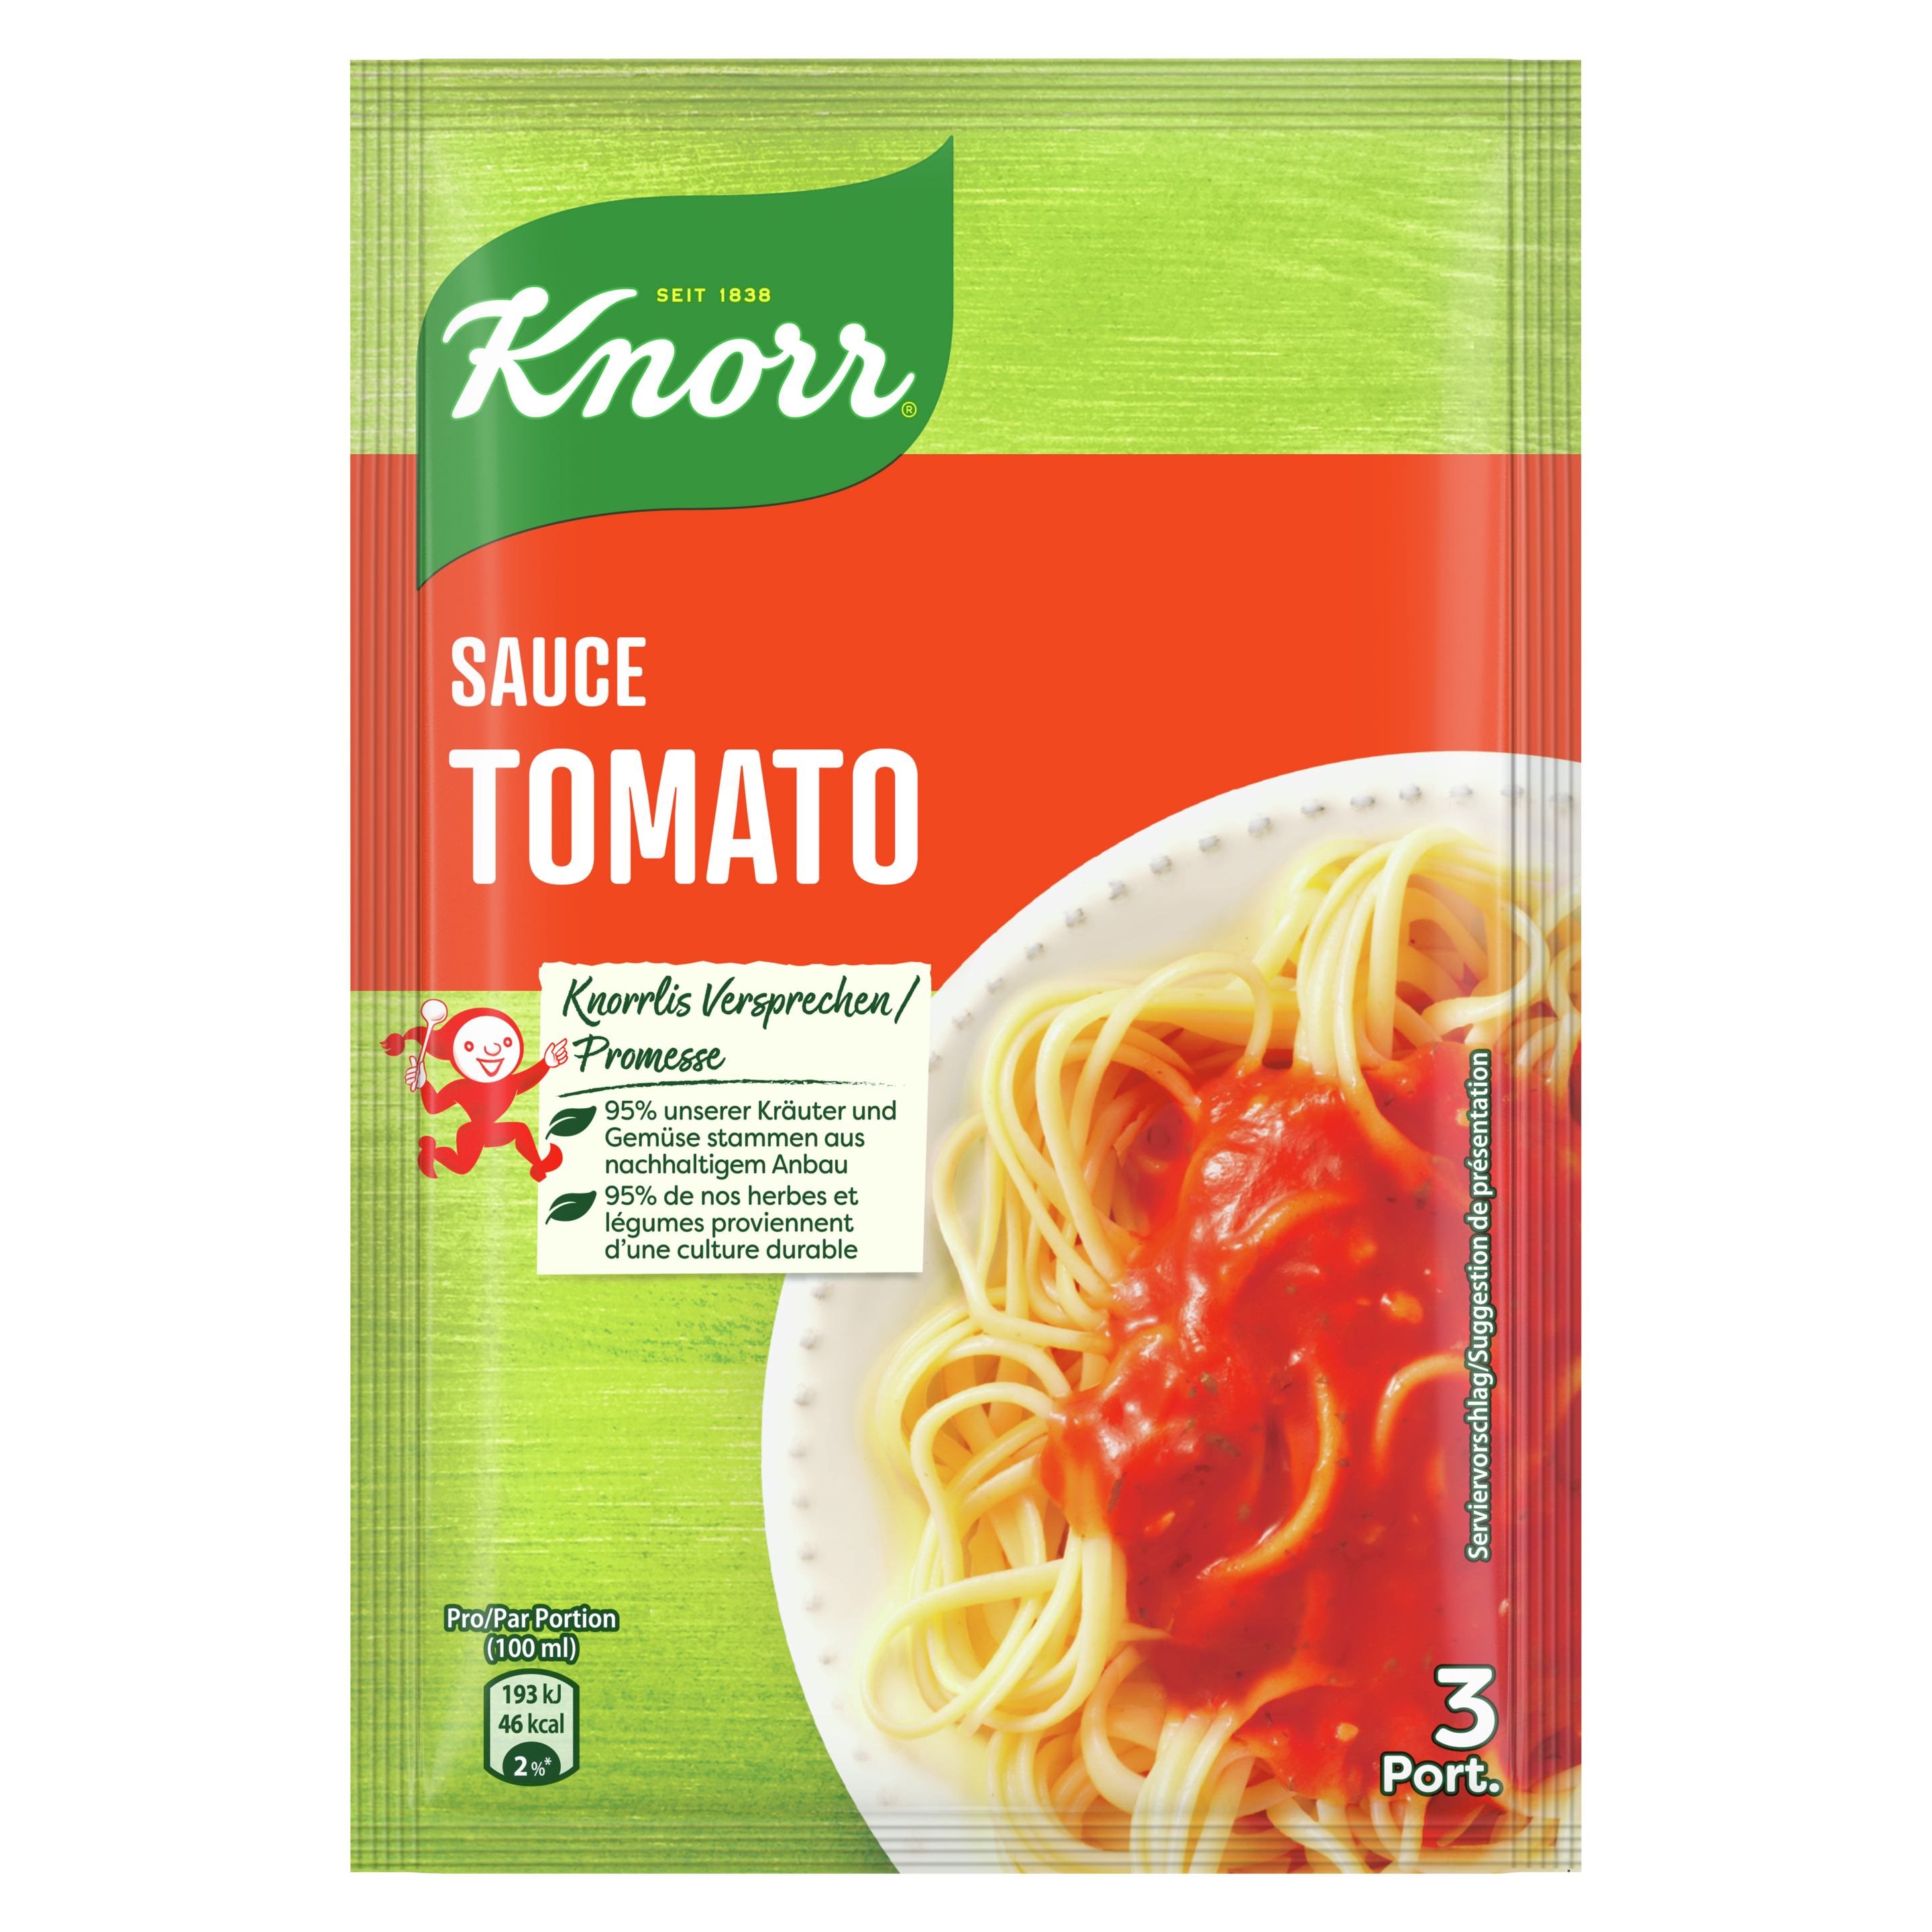 KNORR Tomato Sauce Beutel 3 Portionen